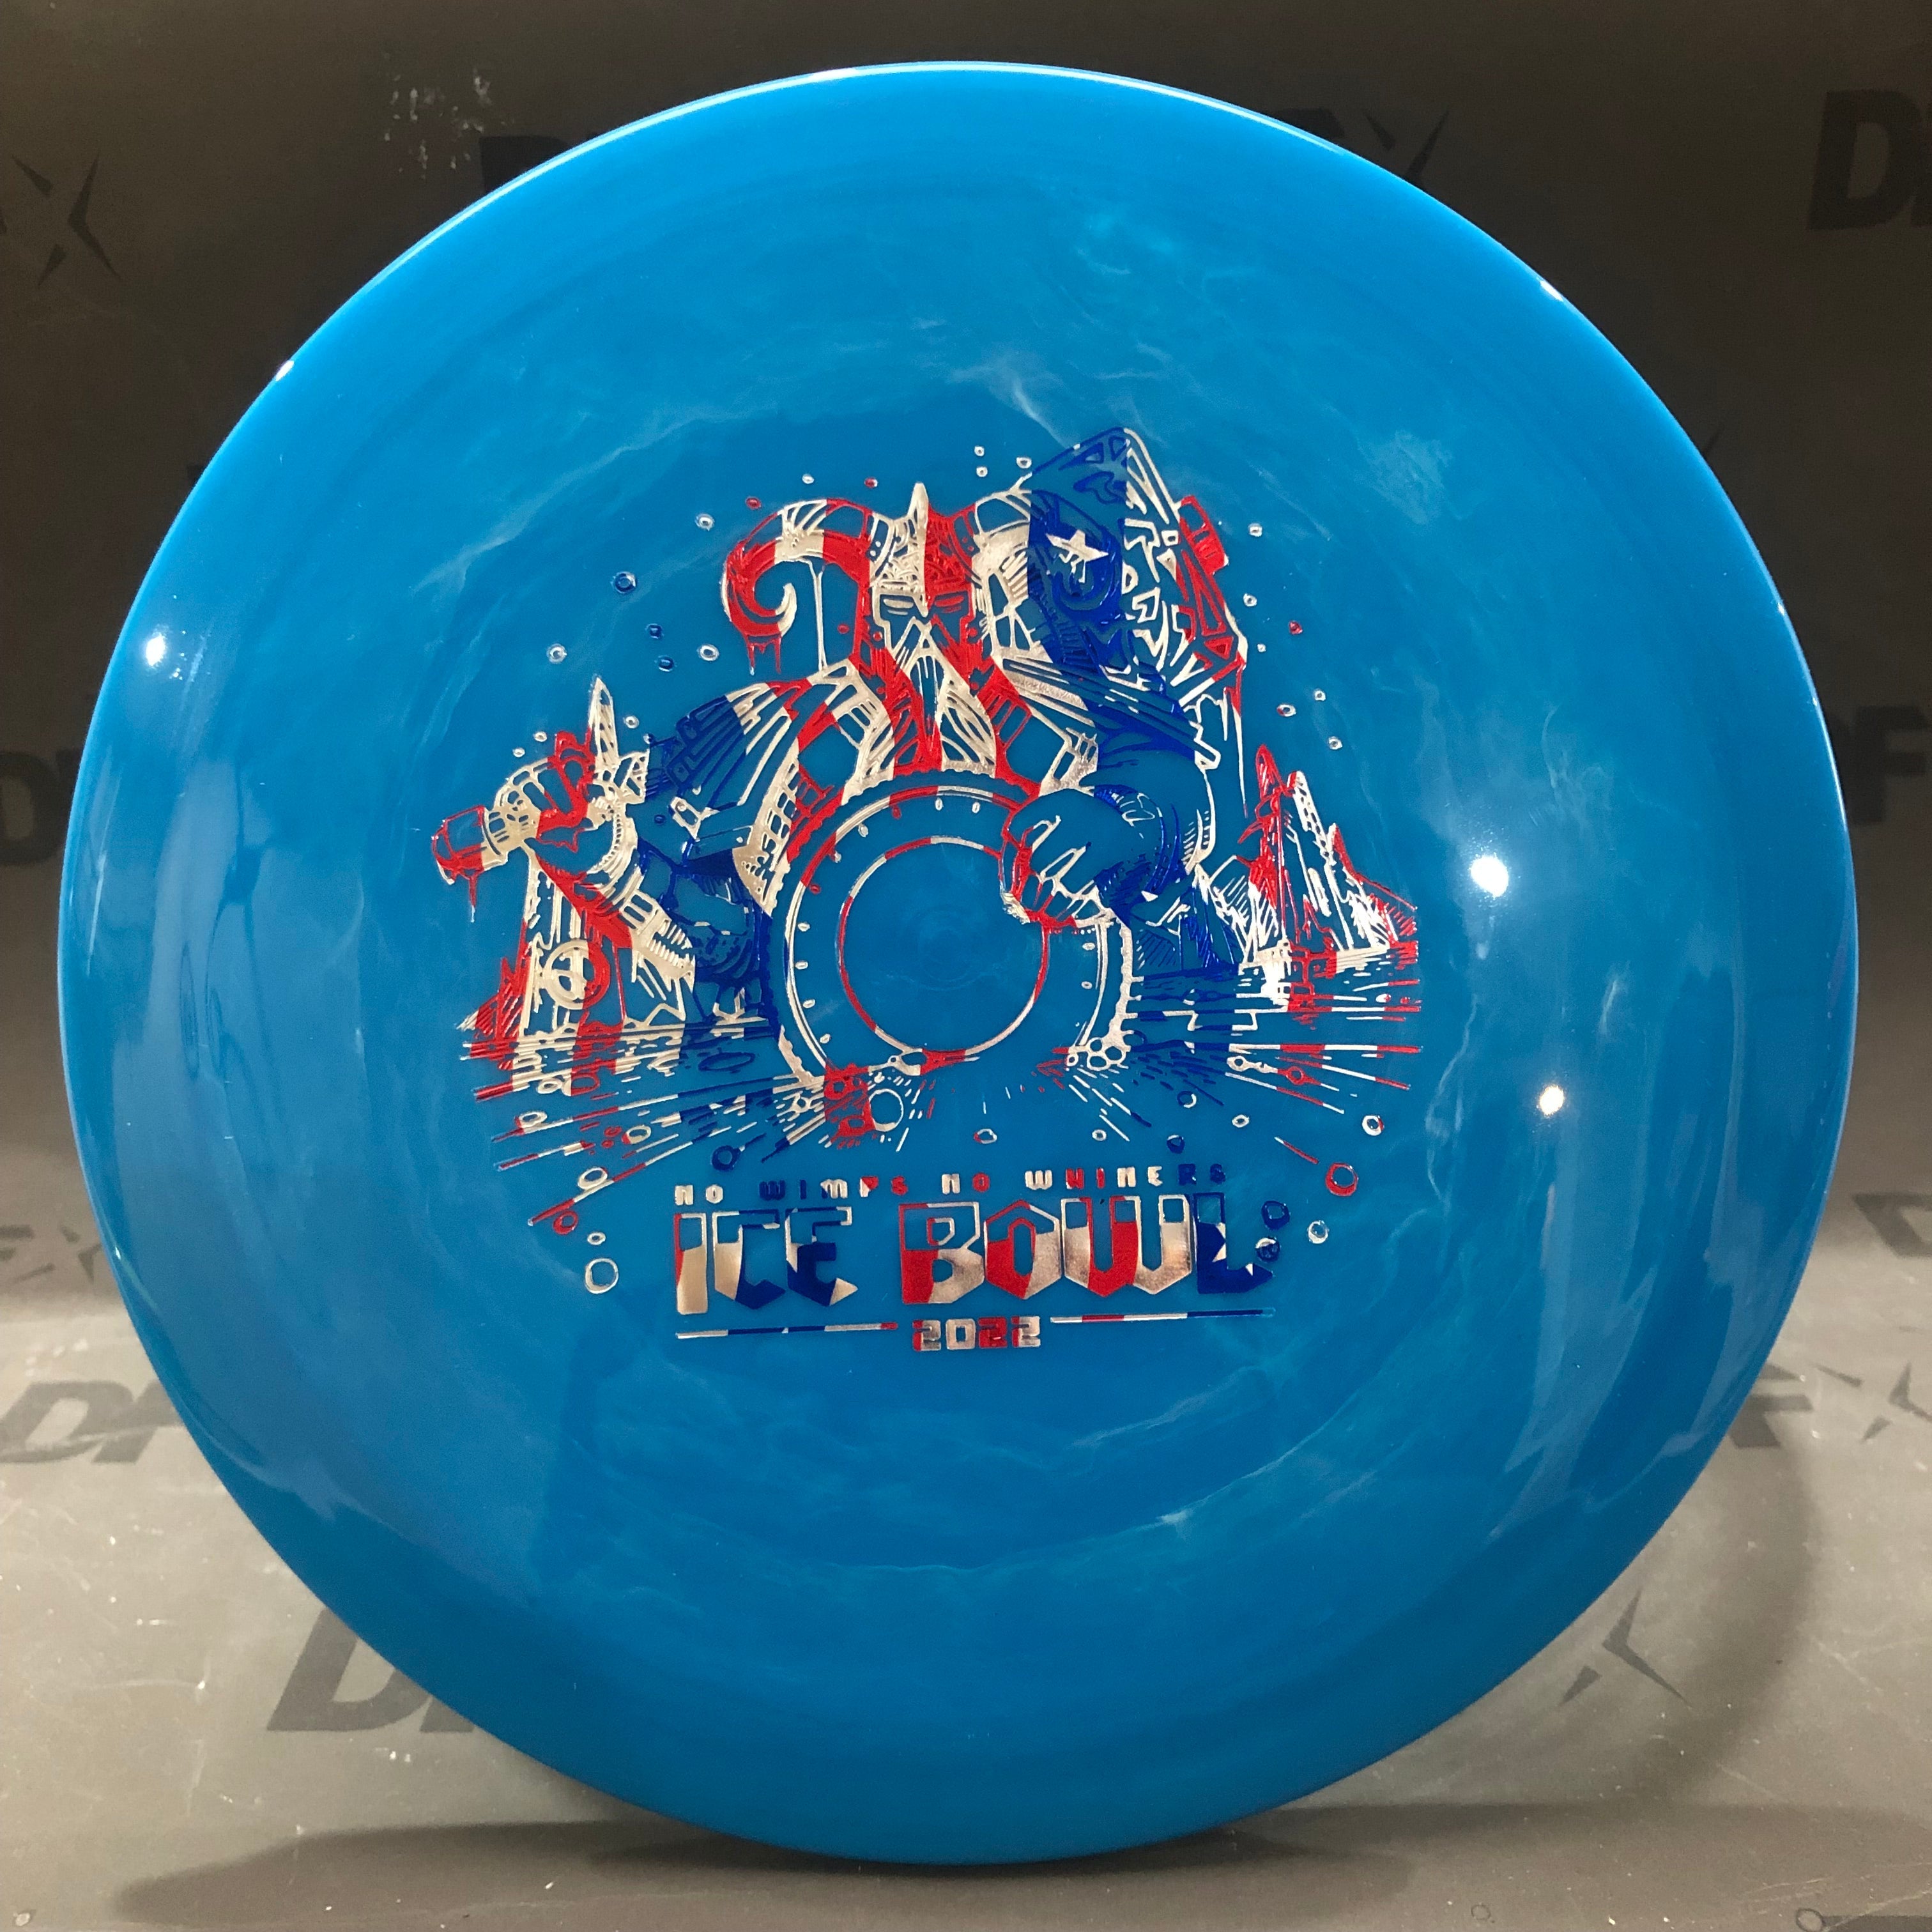 Mint Apex Alpha - Ice Bowl 2022